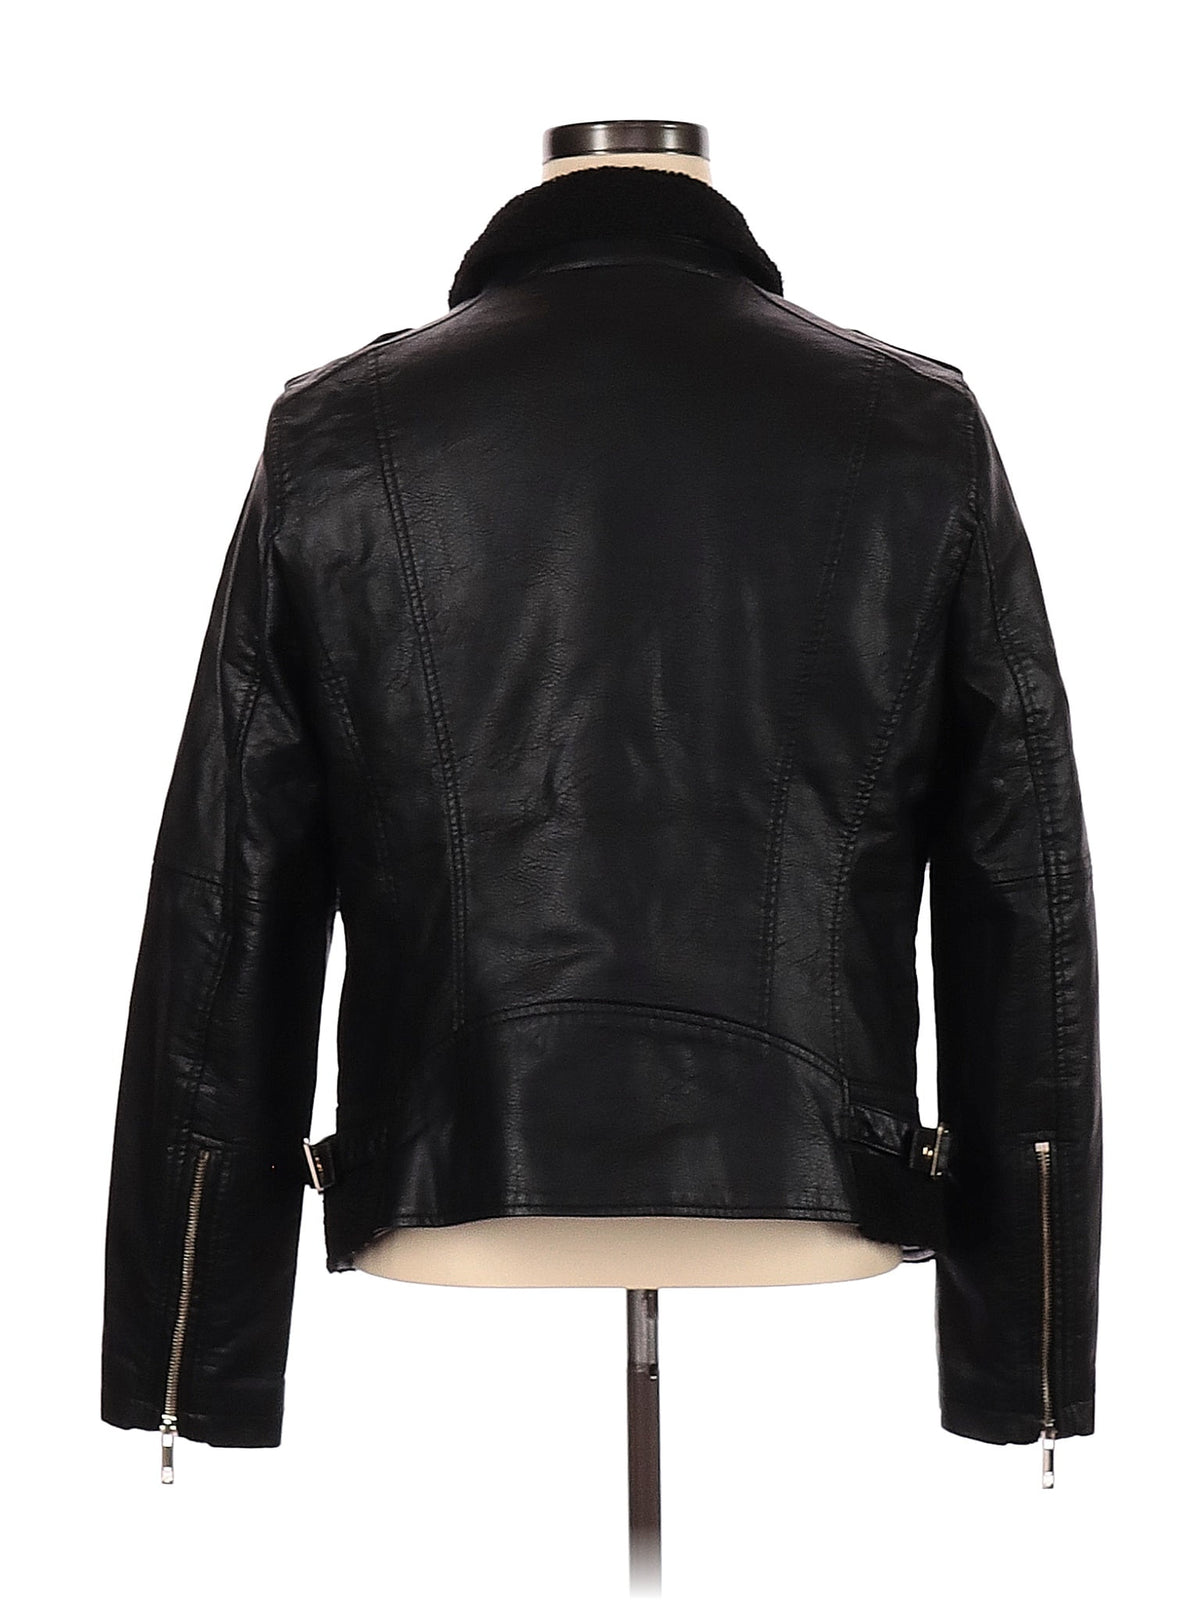 Faux Leather Jacket size - M